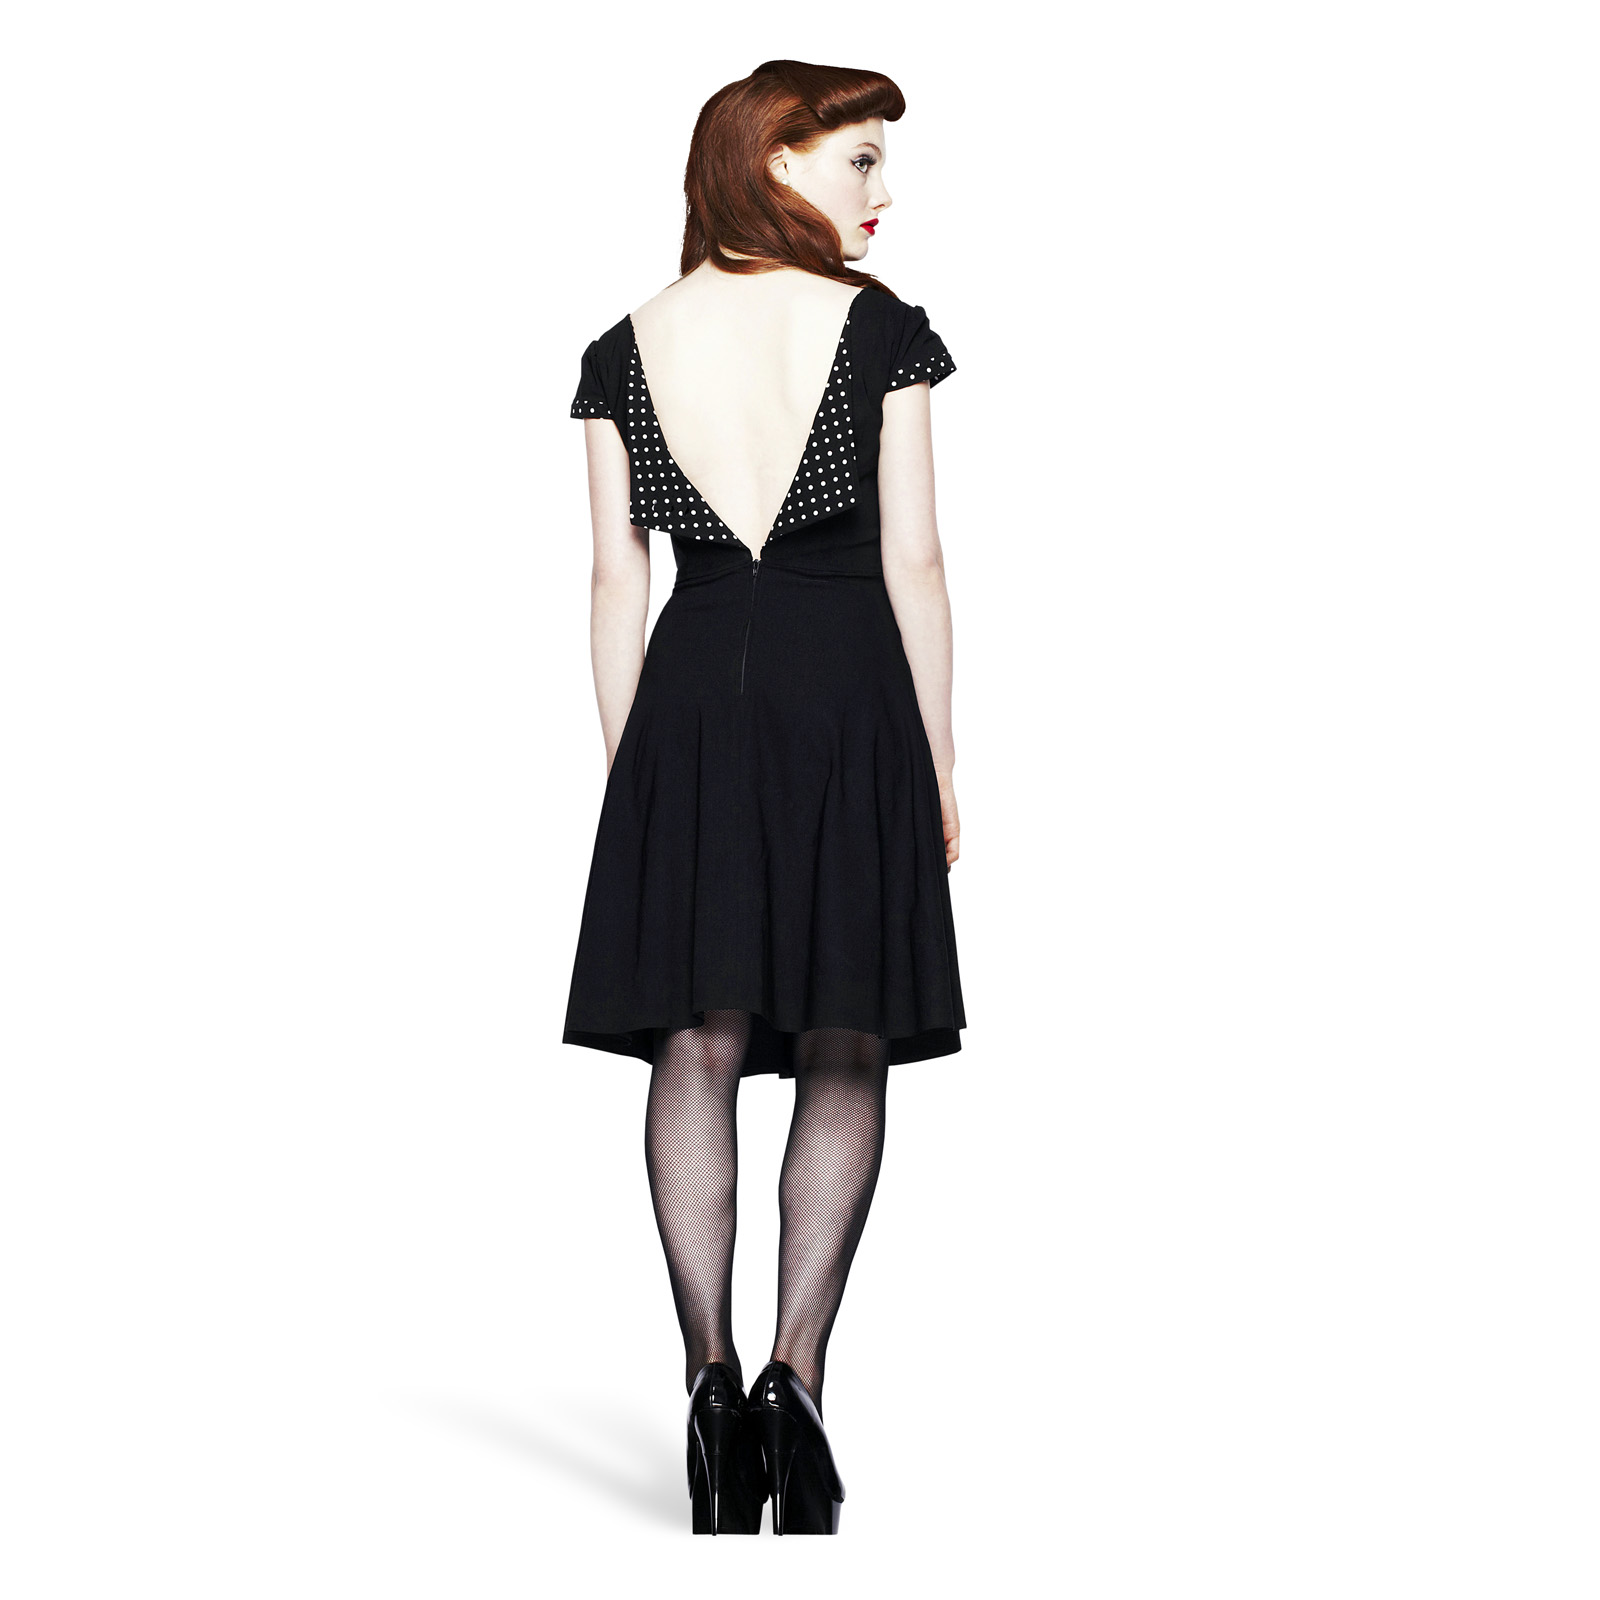 Rockabilly Dress Evie with Back Cutout